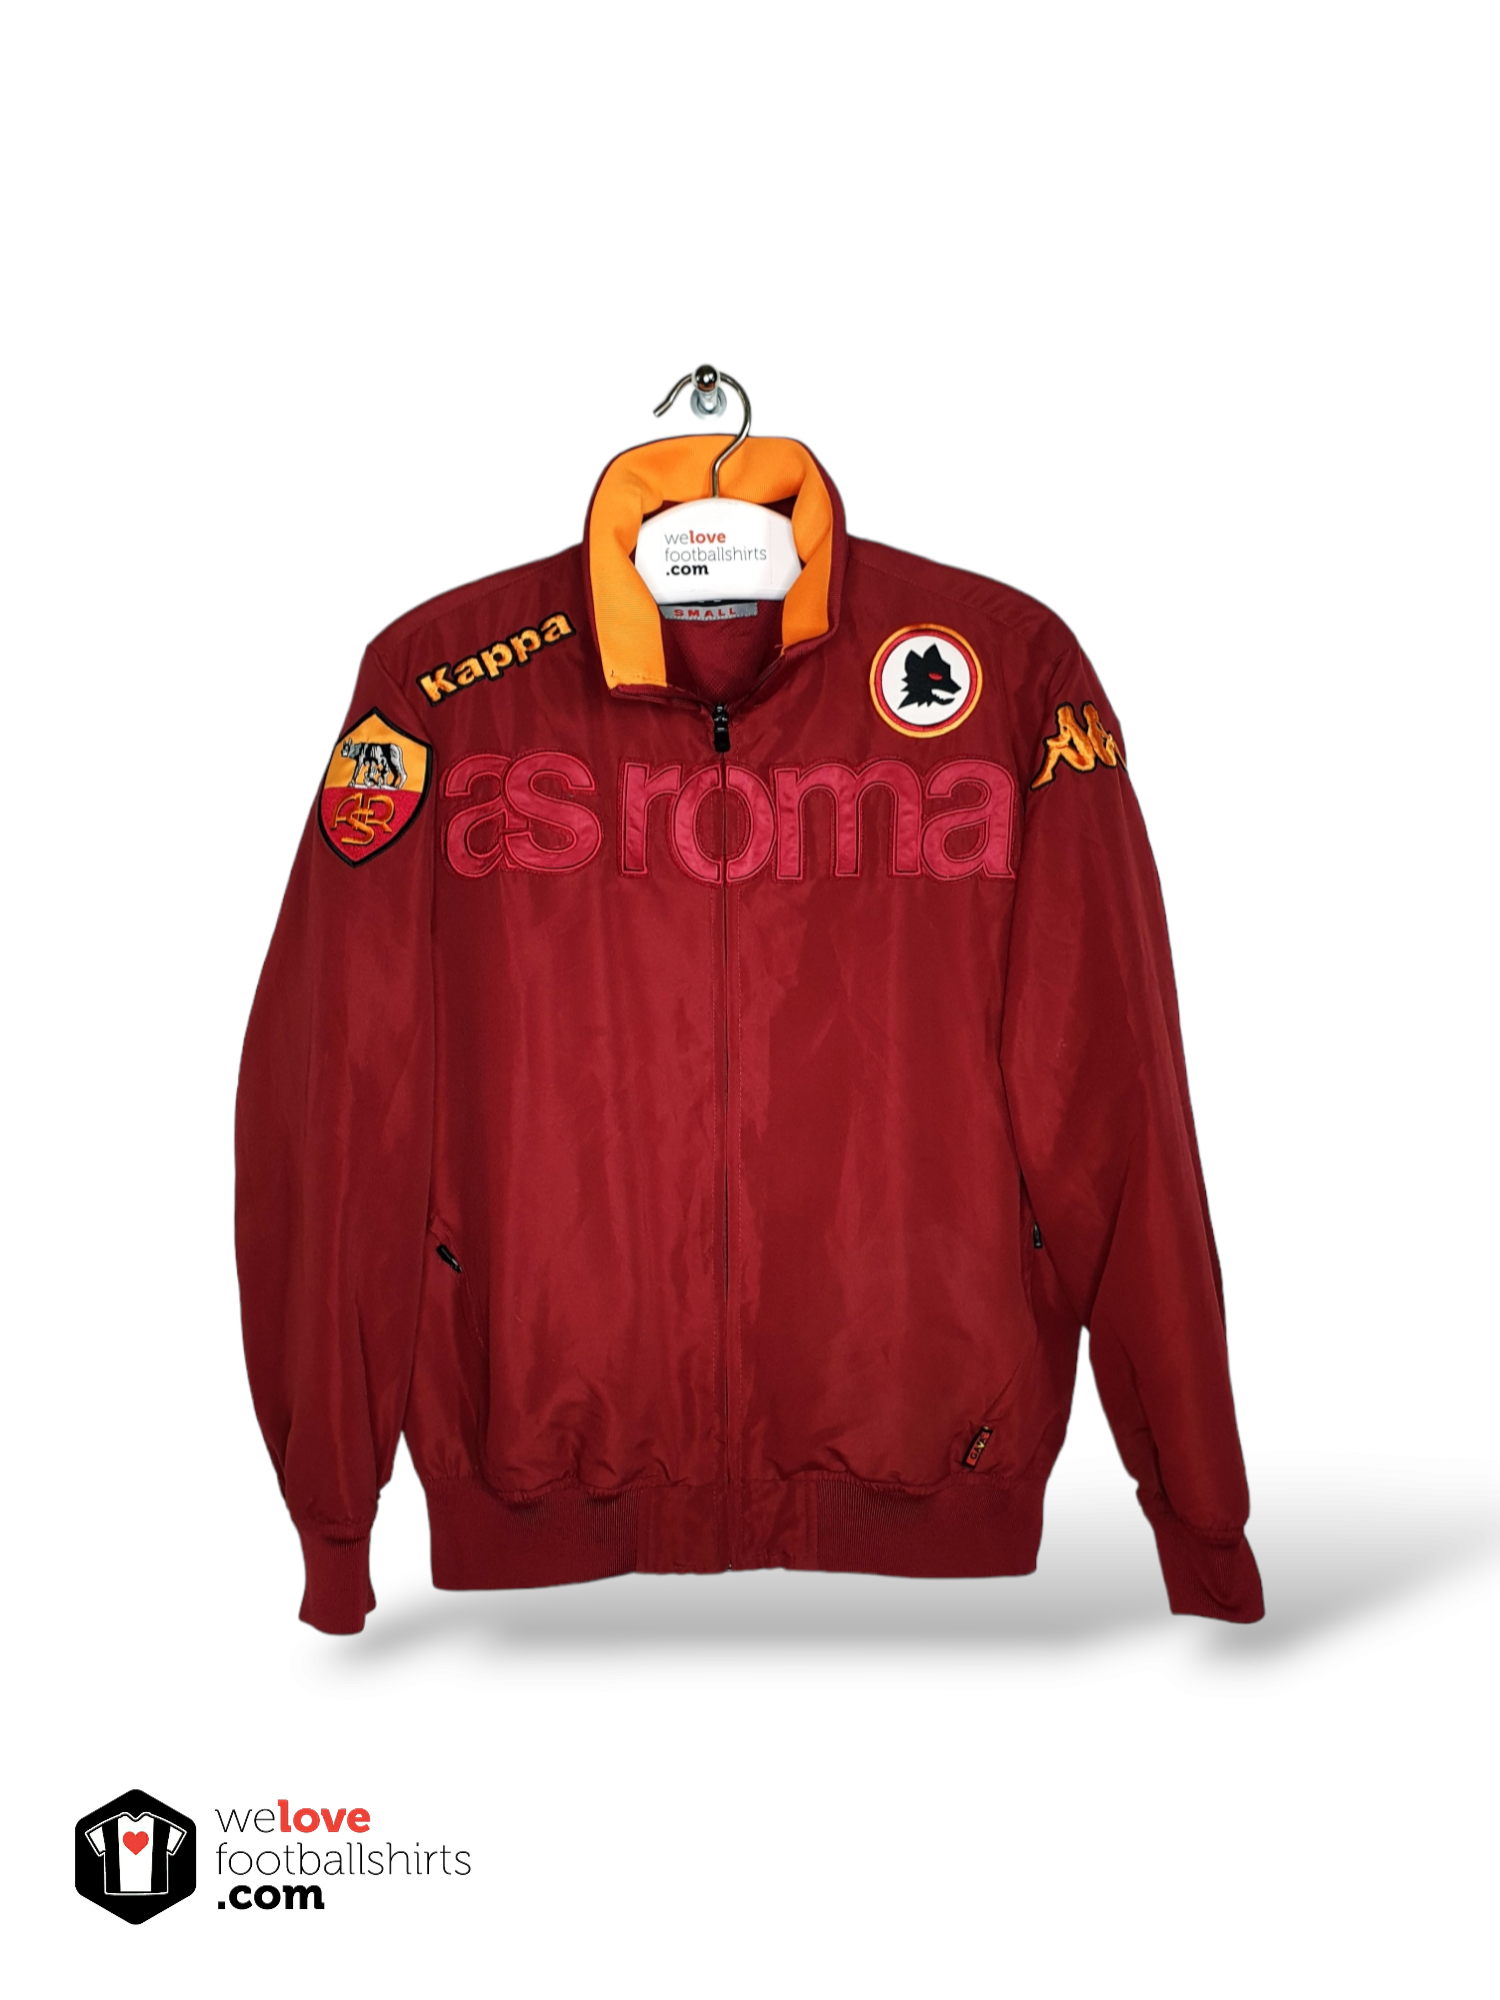 Terugspoelen beschermen vallei Kappa football jacket AS Roma 2009/11 - Welovefootballshirts.com